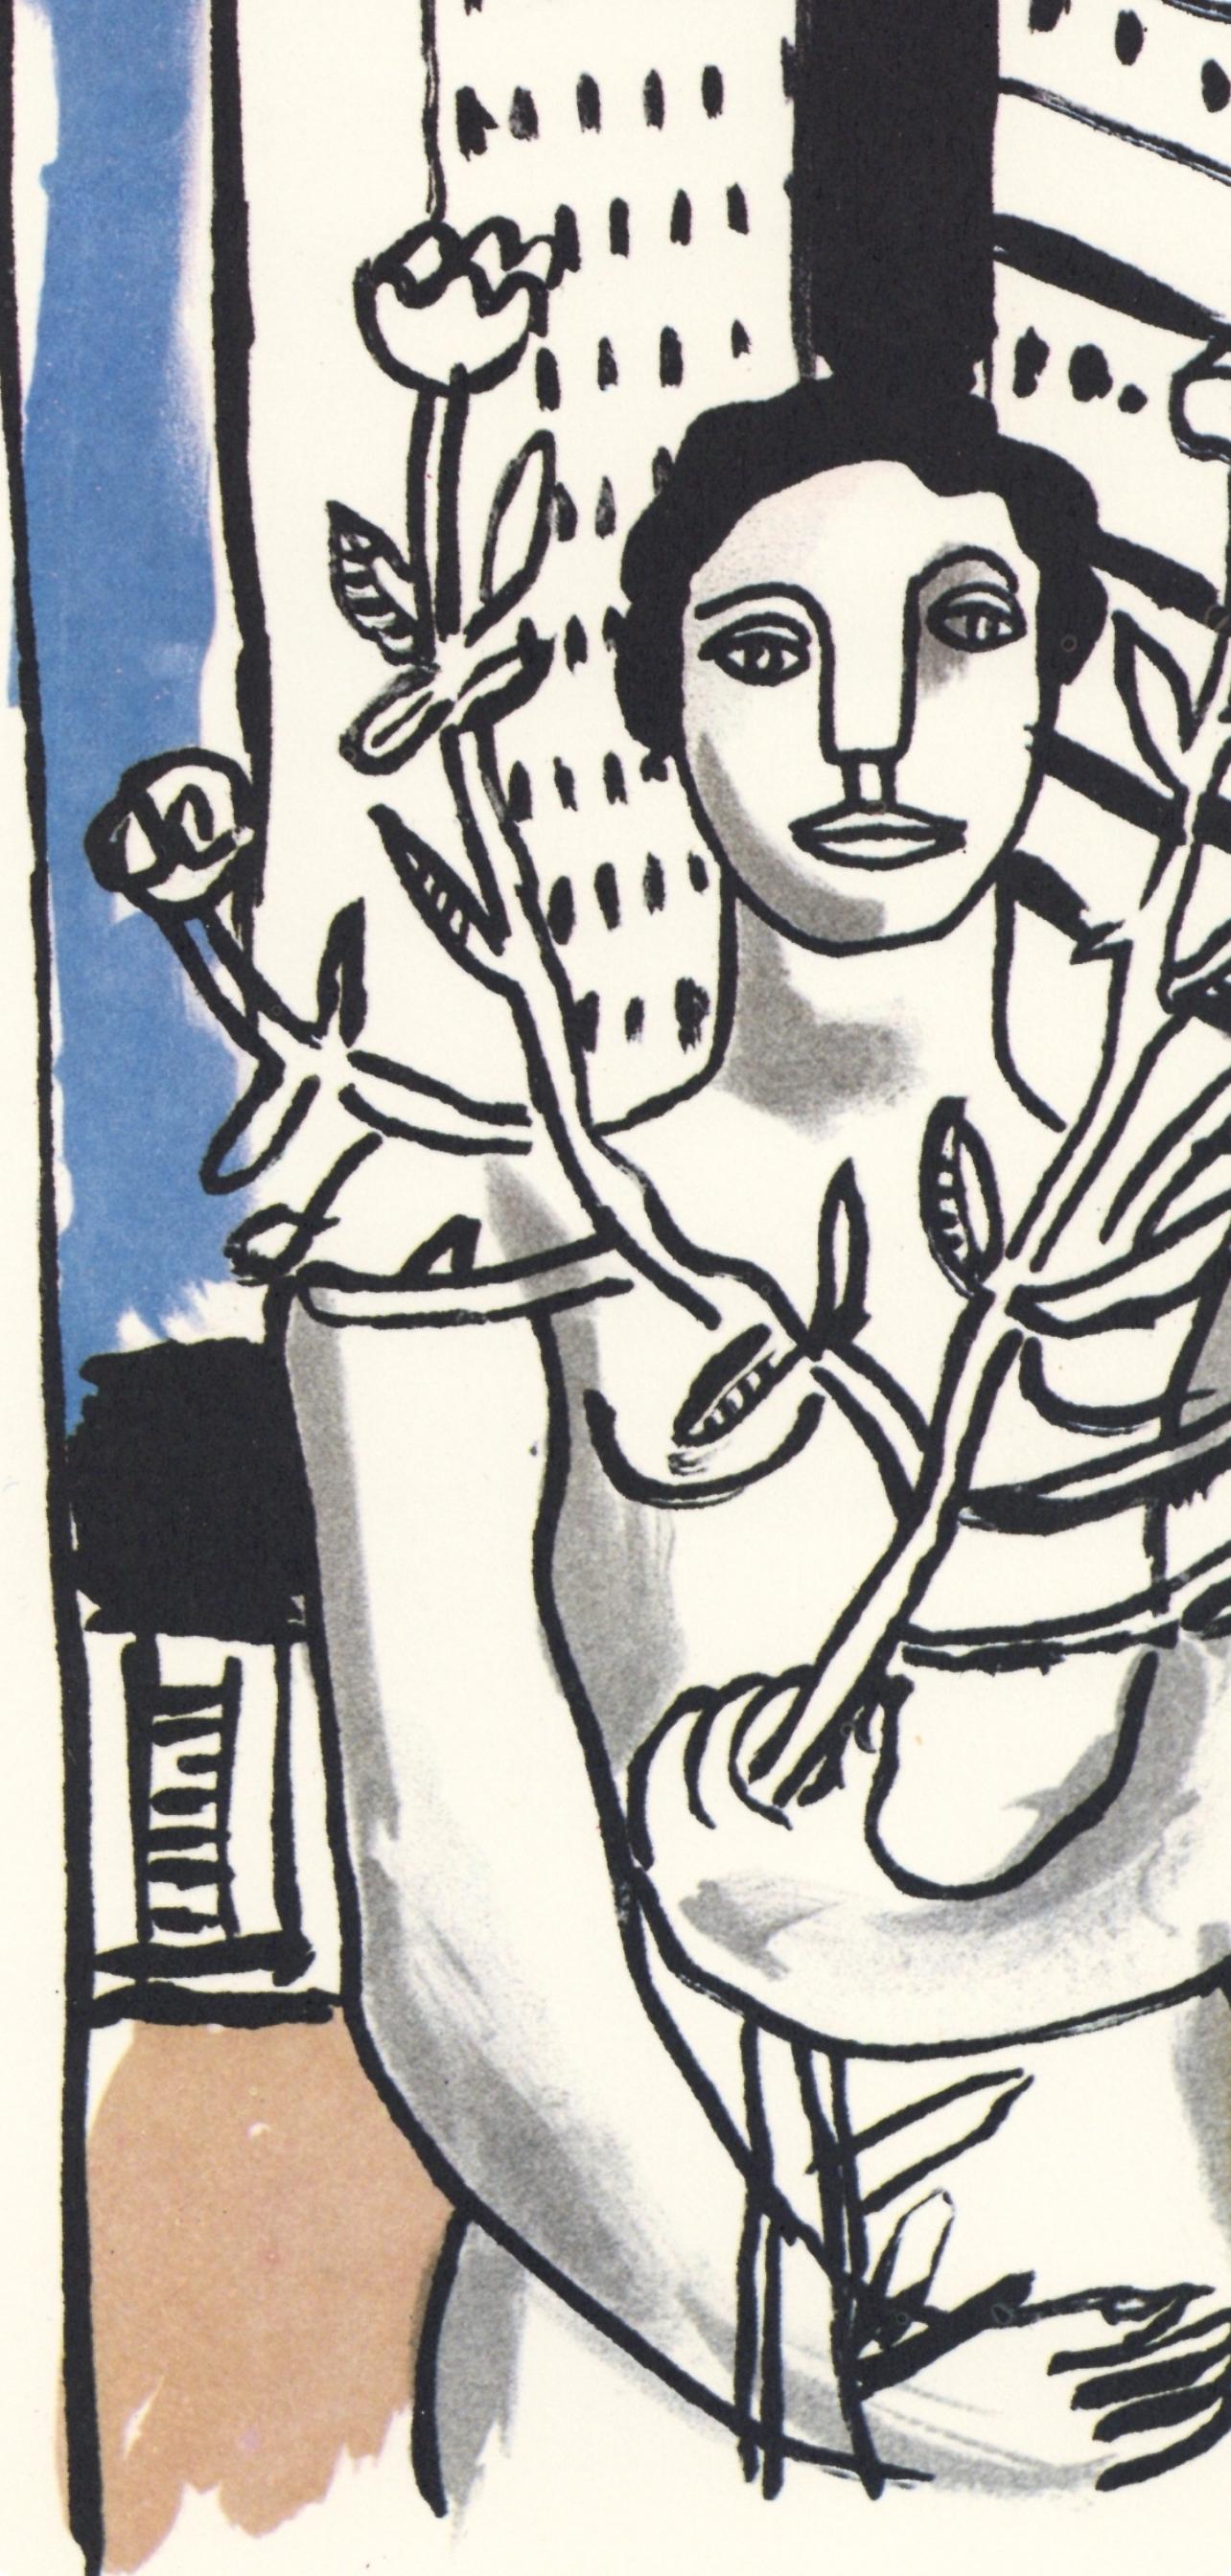 Léger, Composition, mes voyages (after) - Modern Print by Fernand Léger